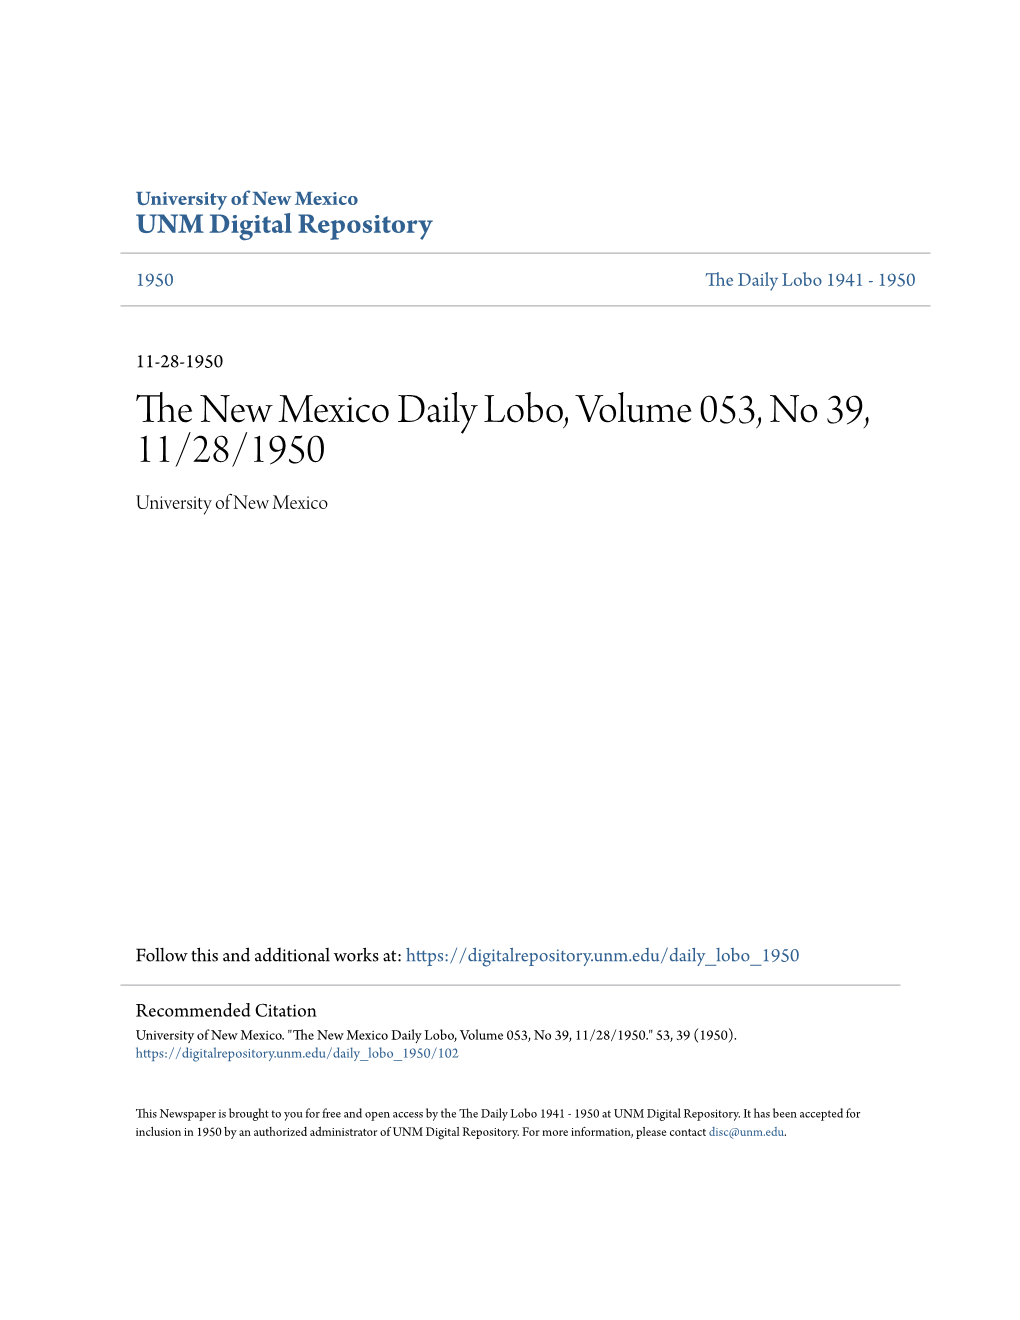 The New Mexico Daily Lobo, Volume 053, No 39, 11/28/1950